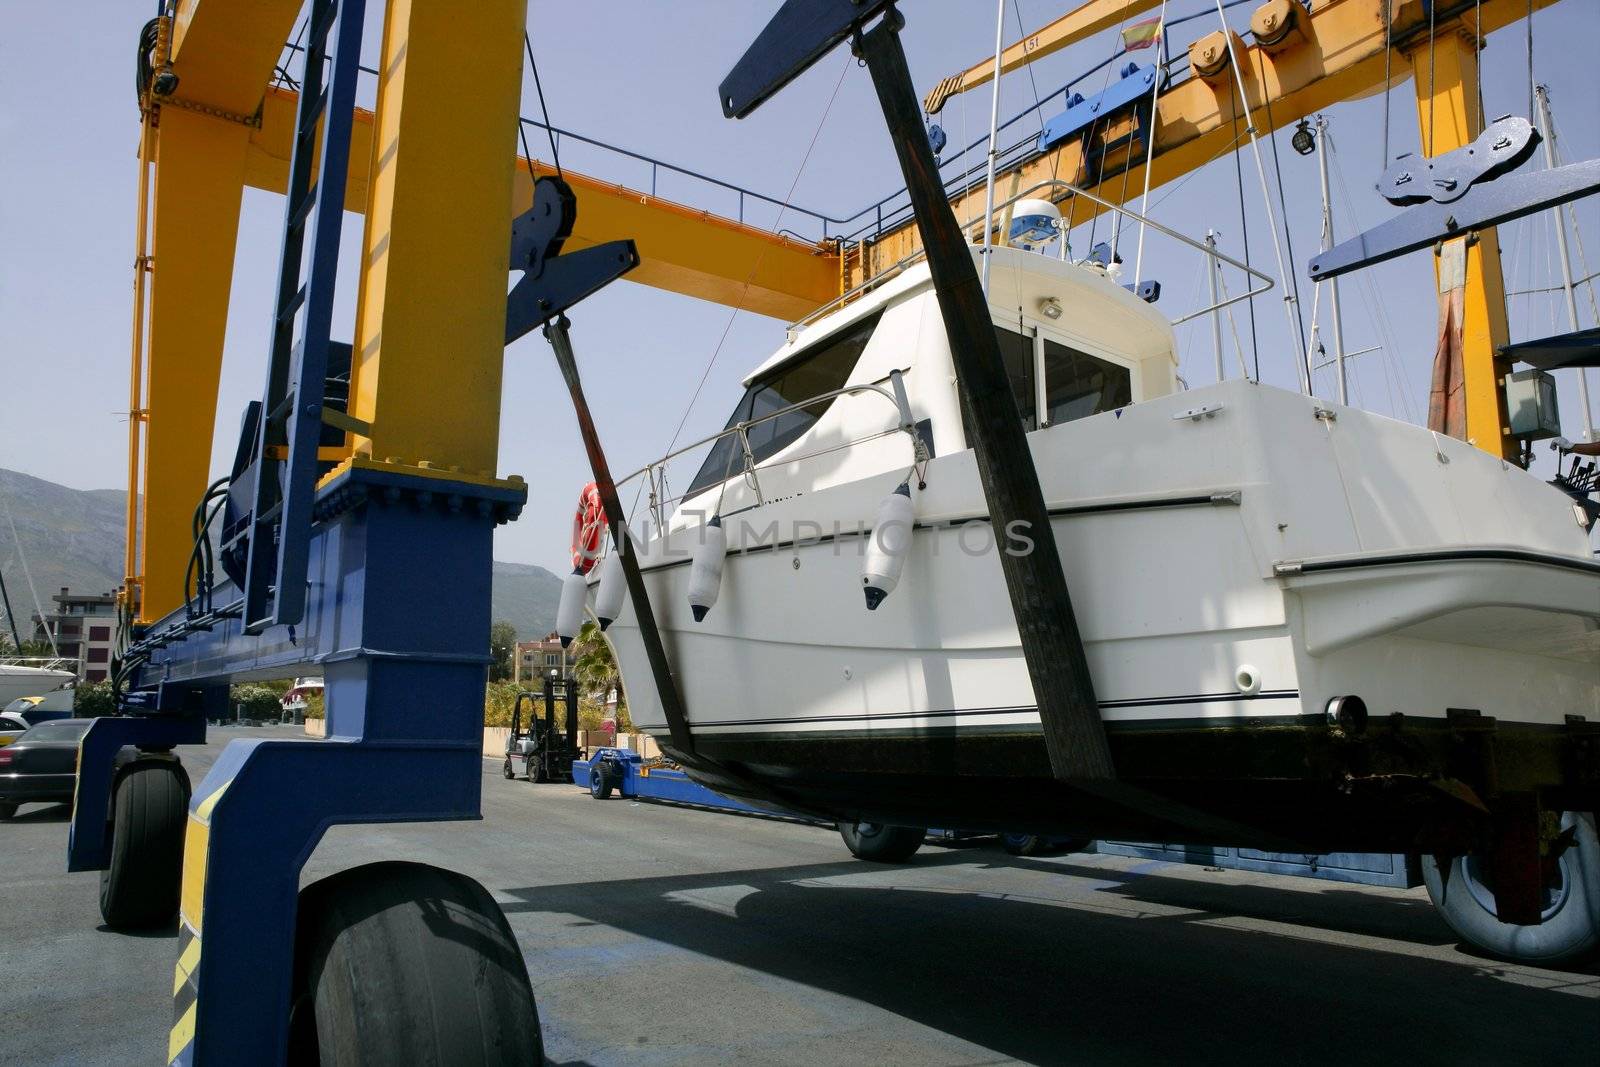 Dock crane elevating a fishing boat in Mediterranean marina